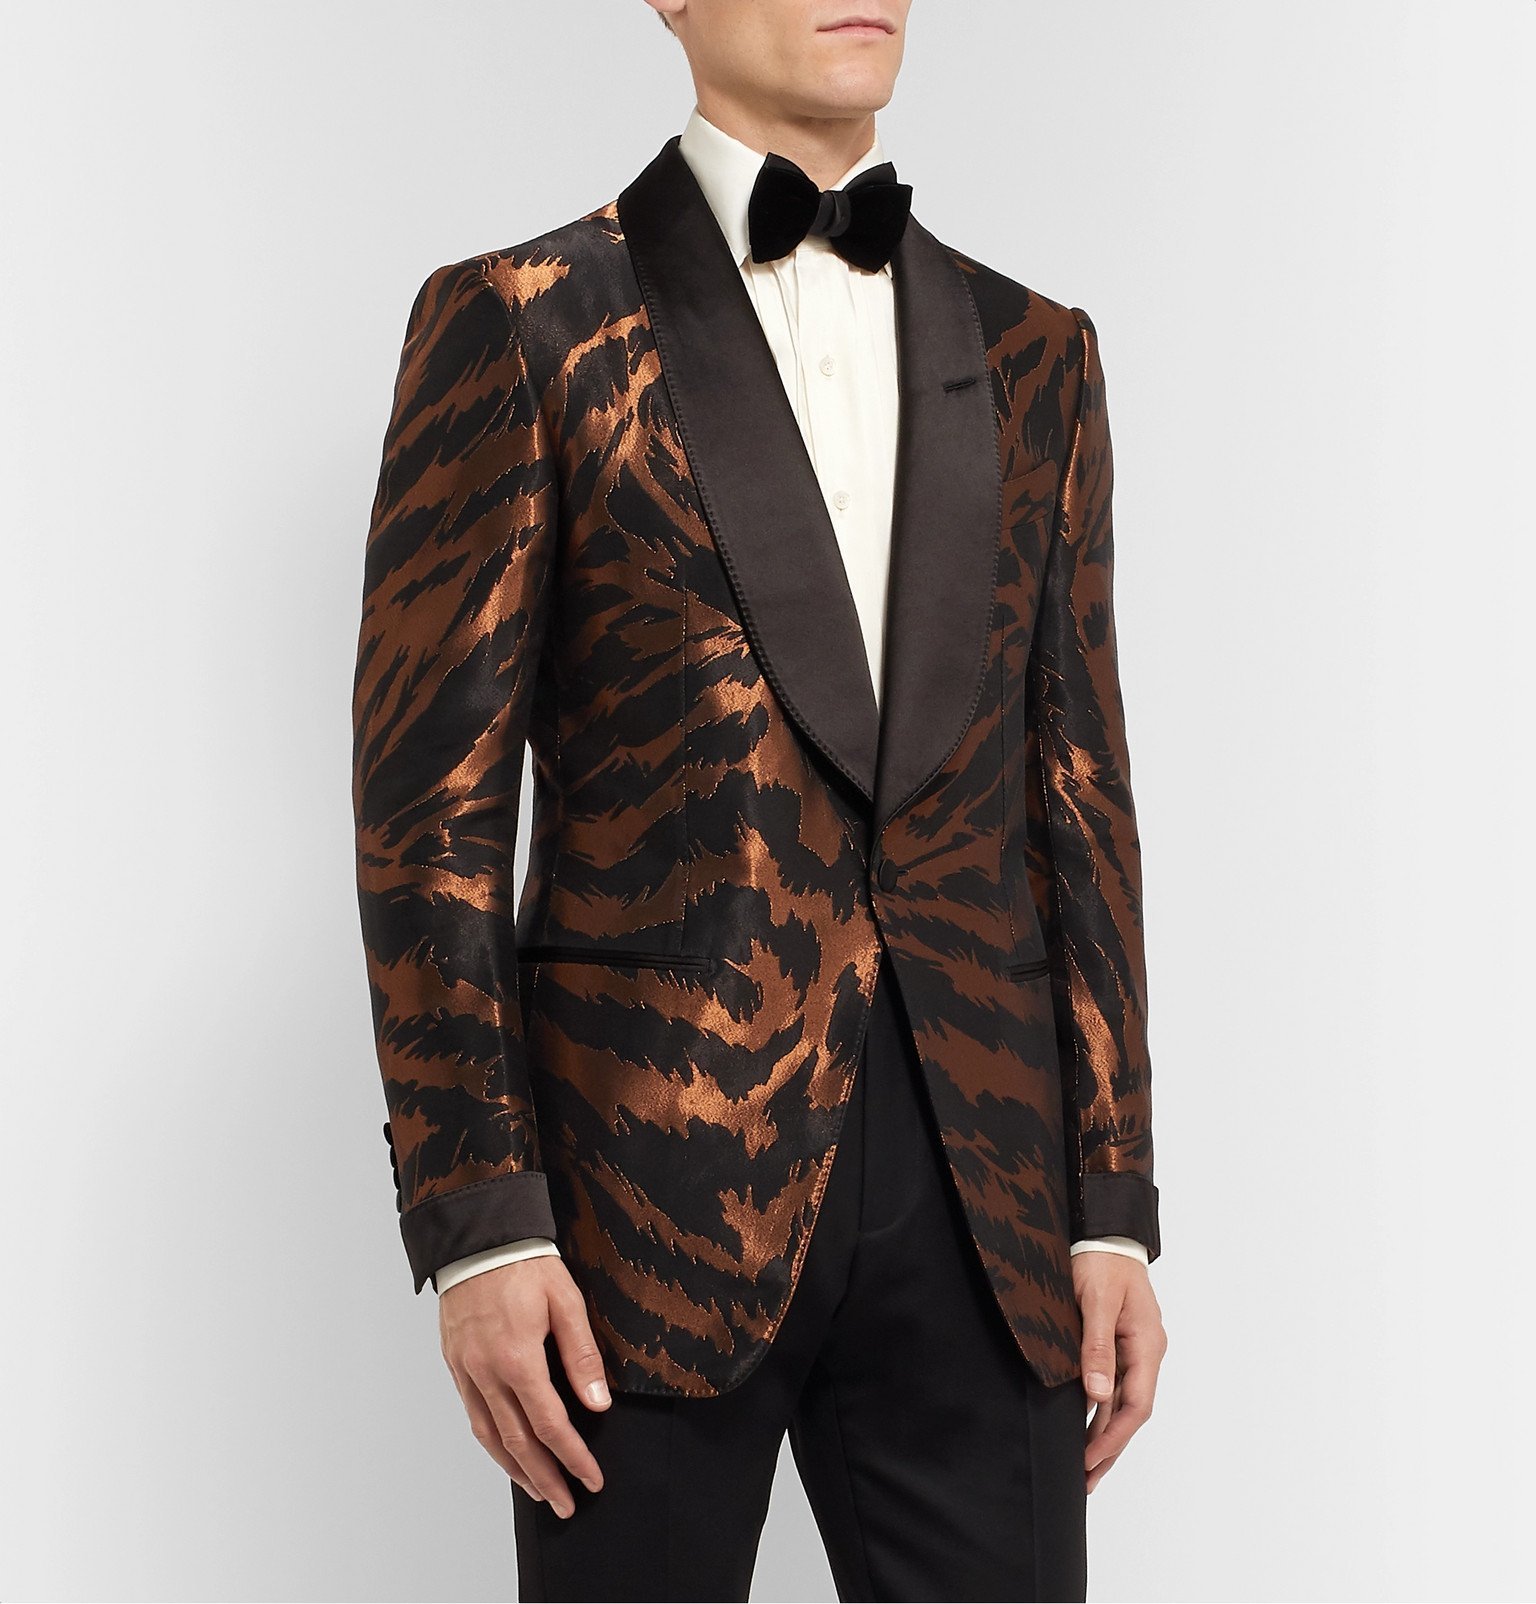 TOM FORD - Copper Slim-Fit Satin-Trimmed Zebra-Jacquard Tuxedo Jacket -  Metallic TOM FORD